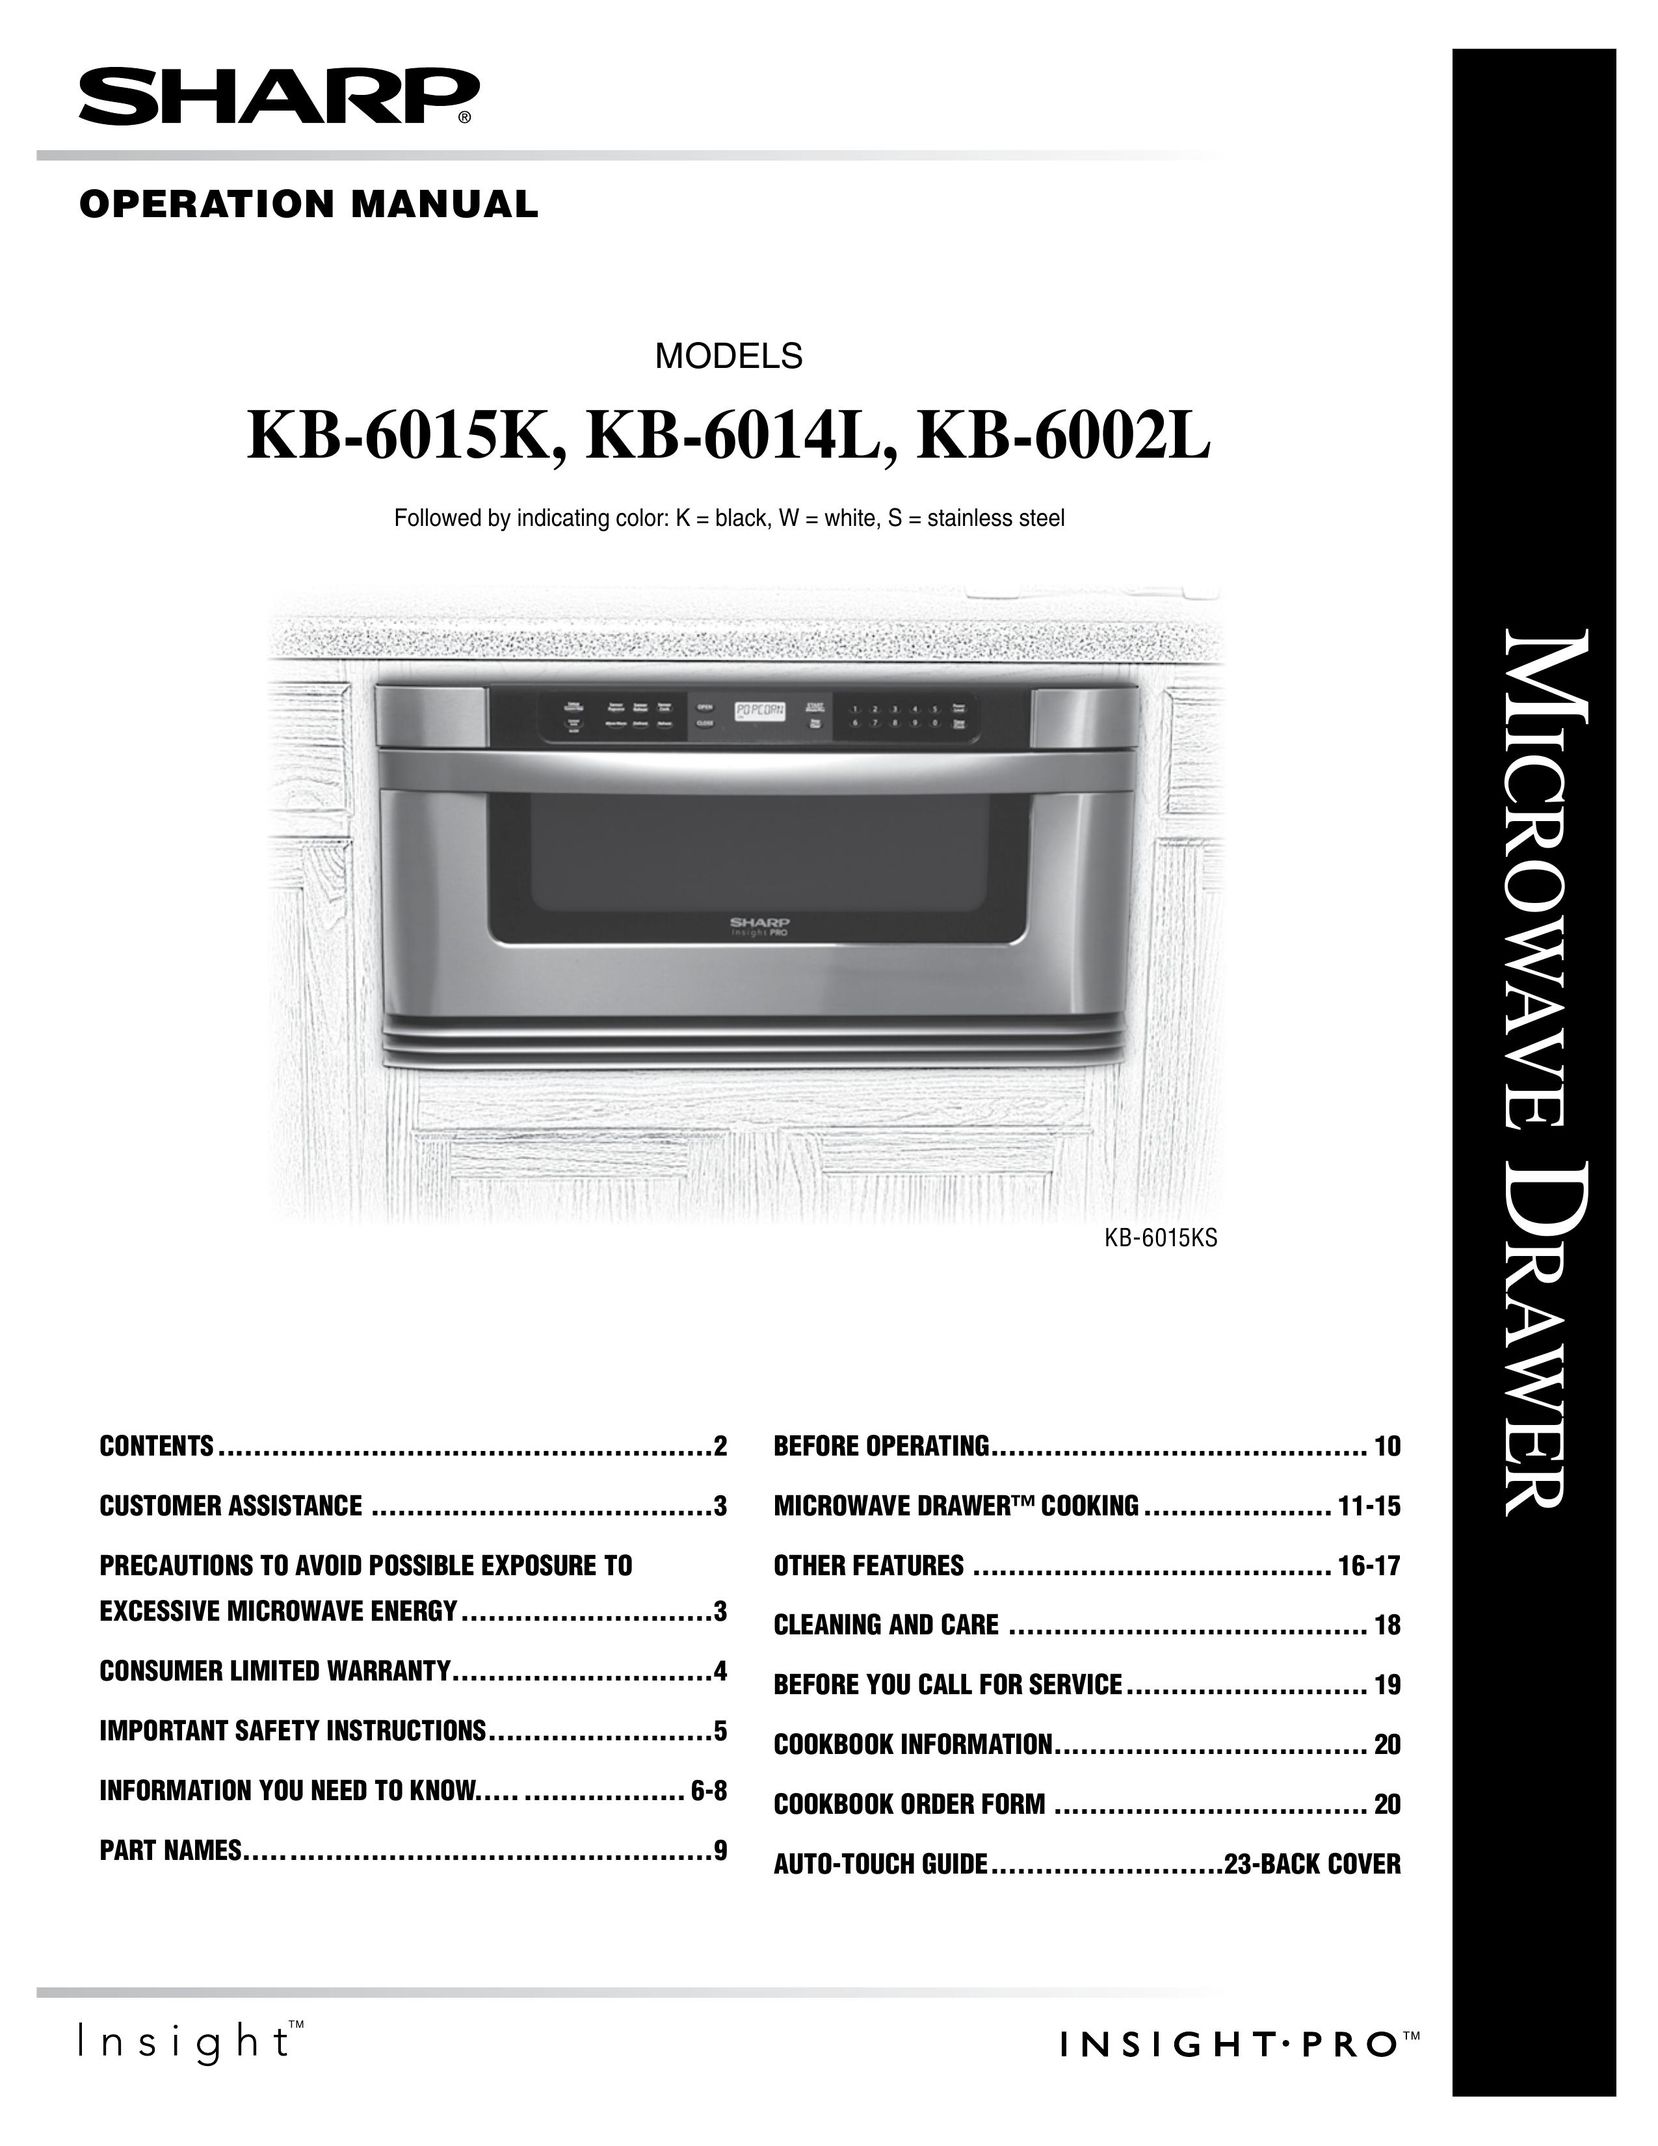 Sharp KB-6014L Microwave Oven User Manual